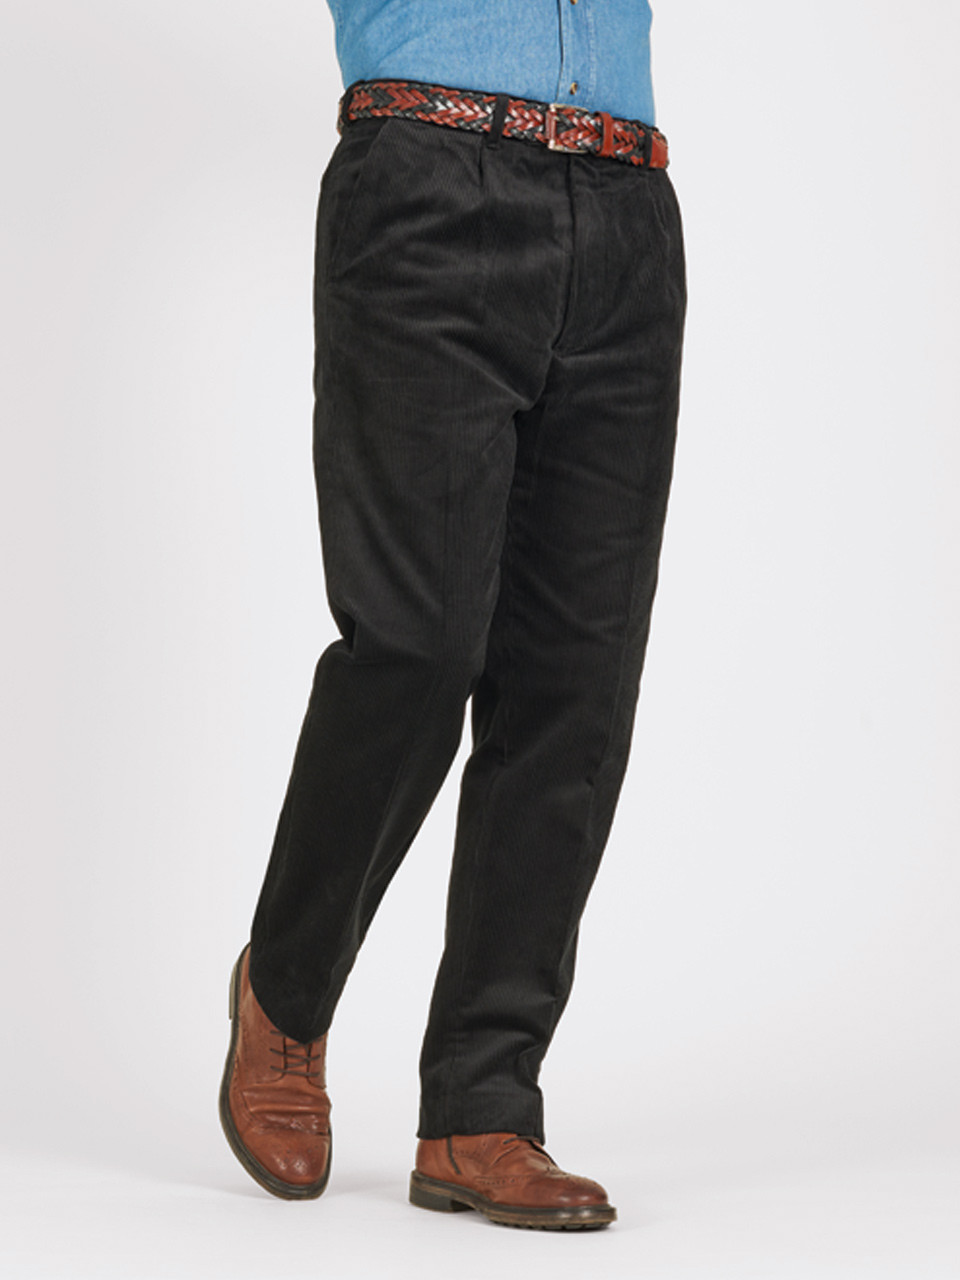 Drawstring Side Pockets High Waist Pure Color Casual Long Pants